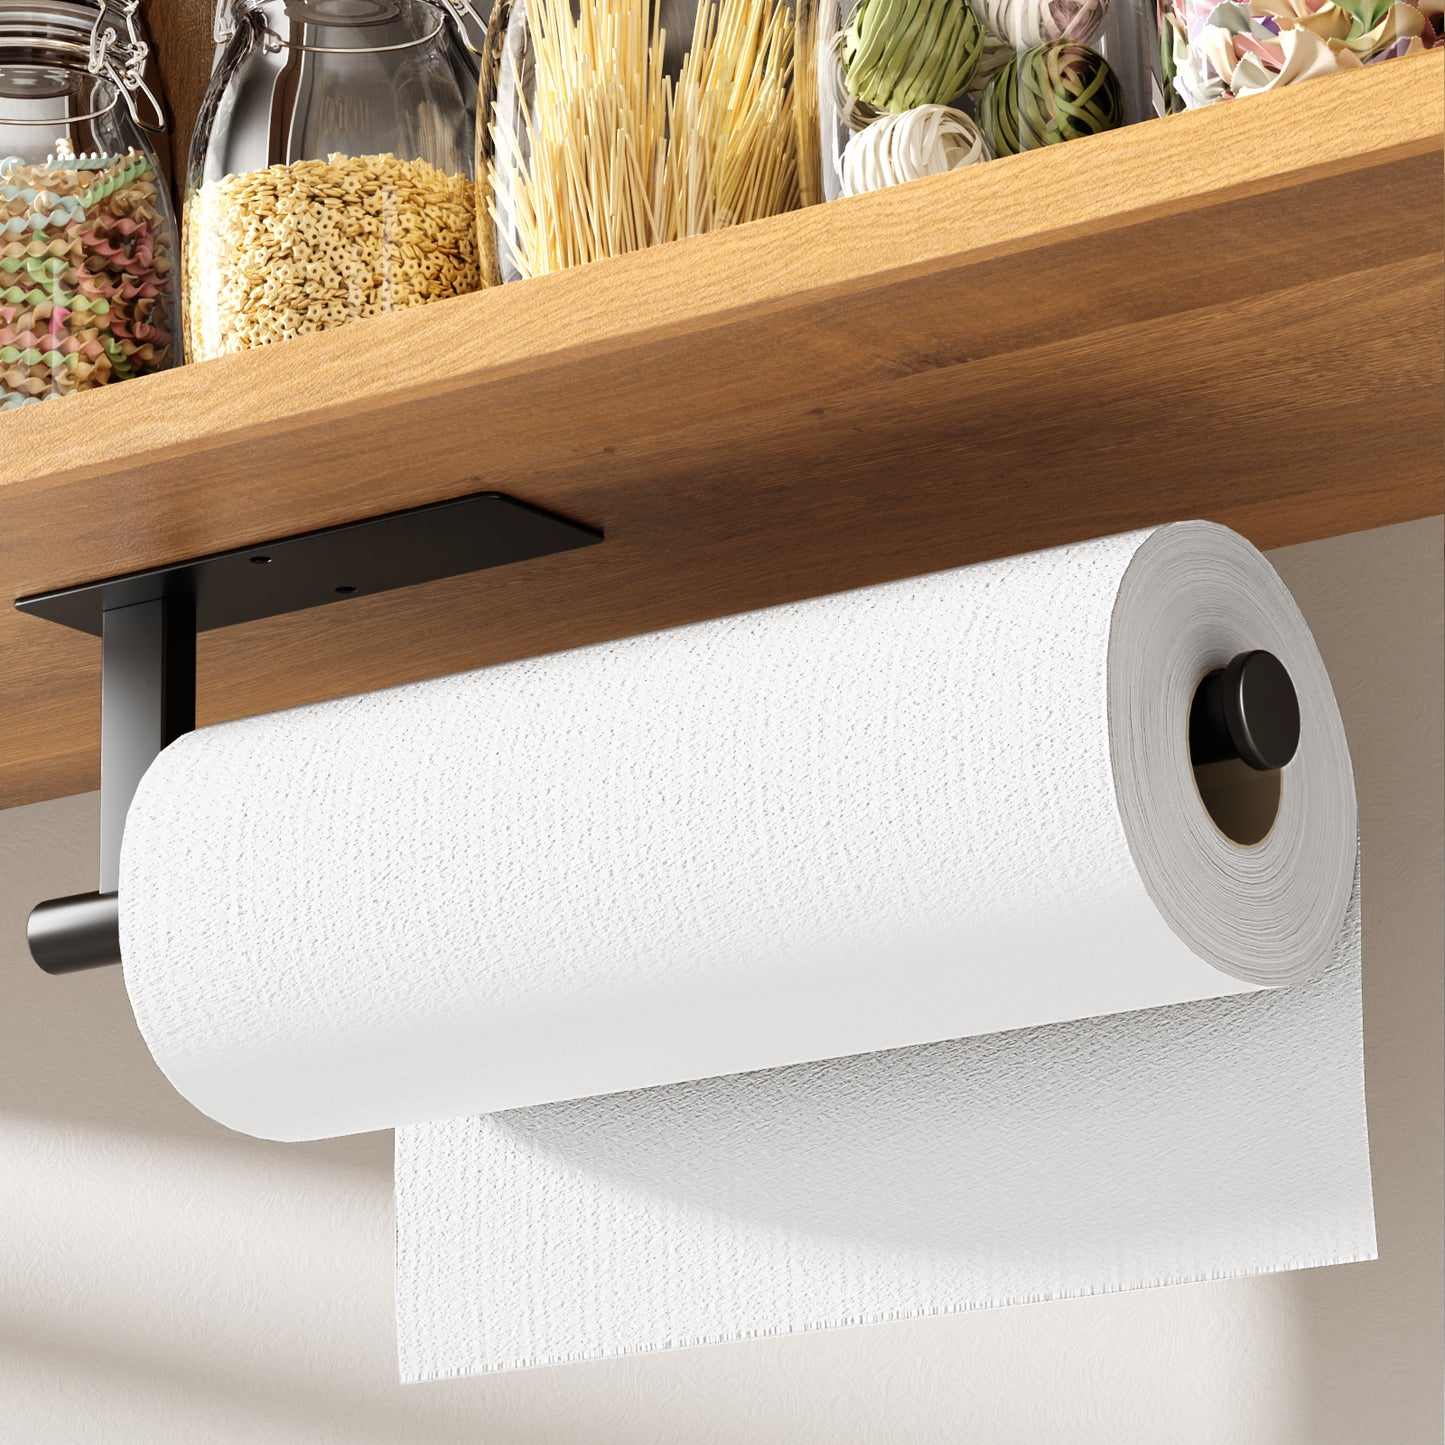 Kitsure Paper Towel Holder Under Cabinet - Sturdy 304 Stainless Steel Kitchen Paper Towel Holder Wall Mount, Drilling or Self Adhesive Paper Towel Holder for Kitchen, Bathroom, Black（489）